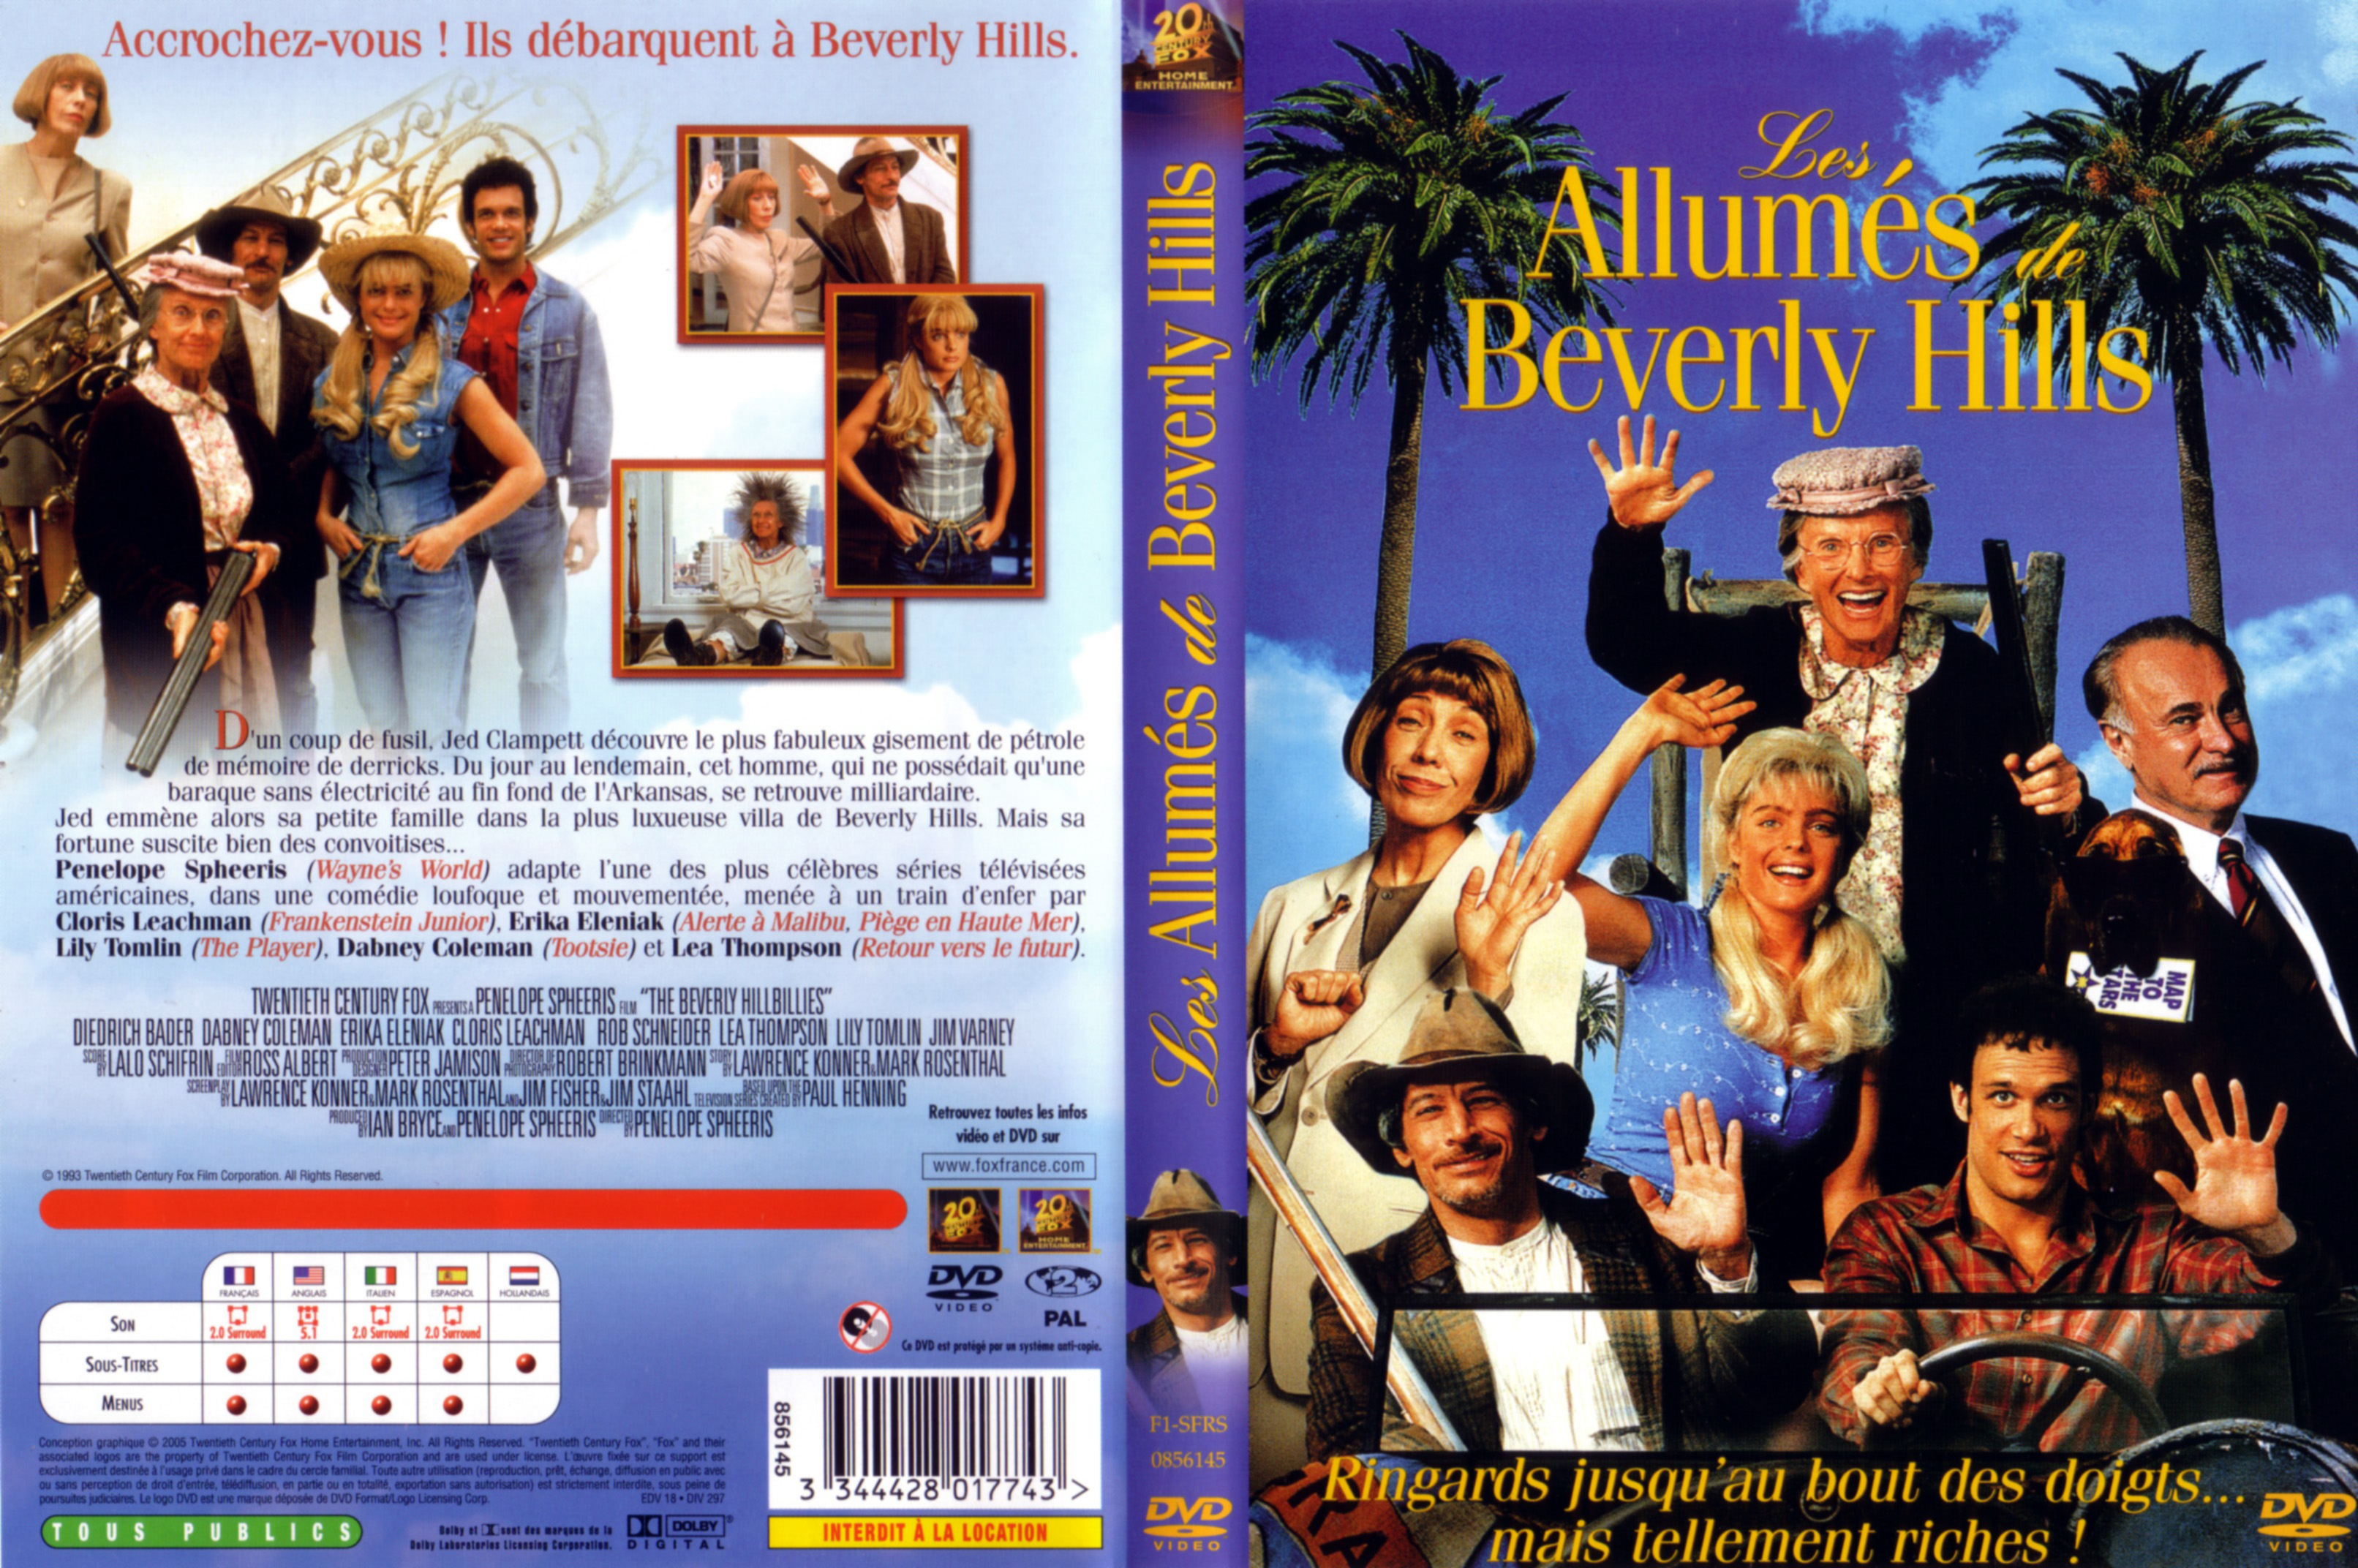 Jaquette DVD Les allums de Beverly Hills